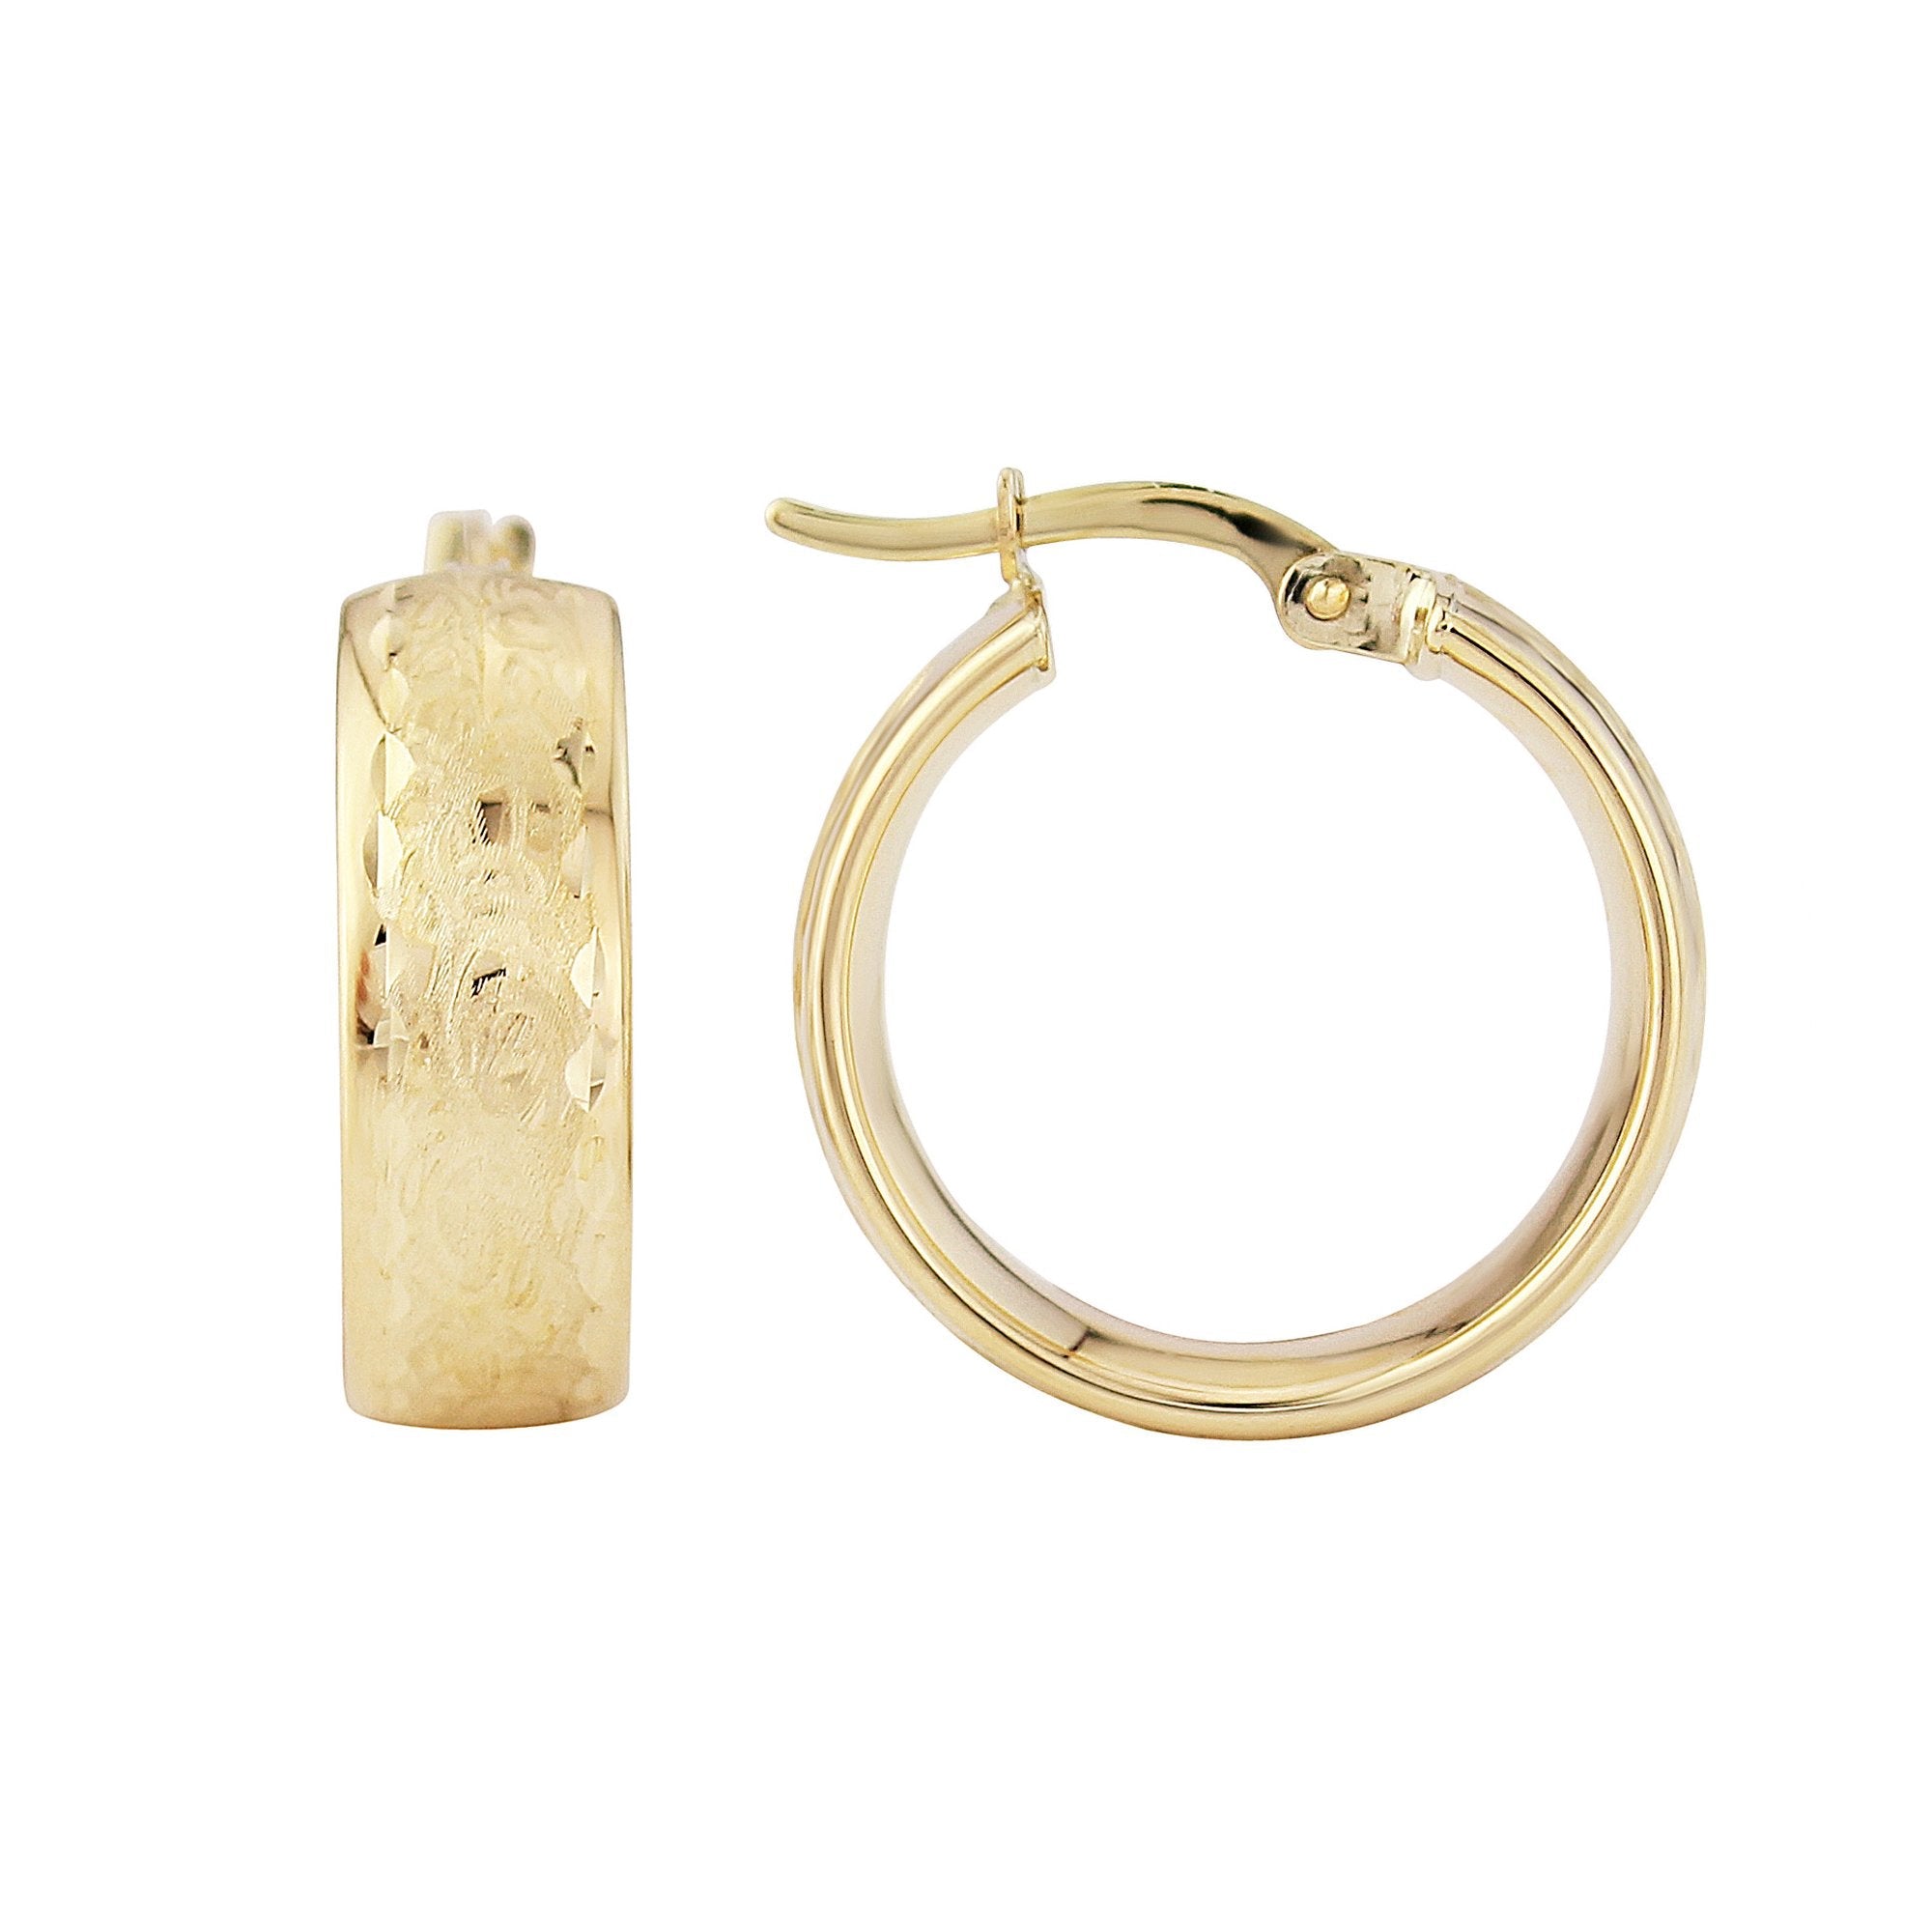 9ct gold 6.00mm x 15mm patterned hoop earrings